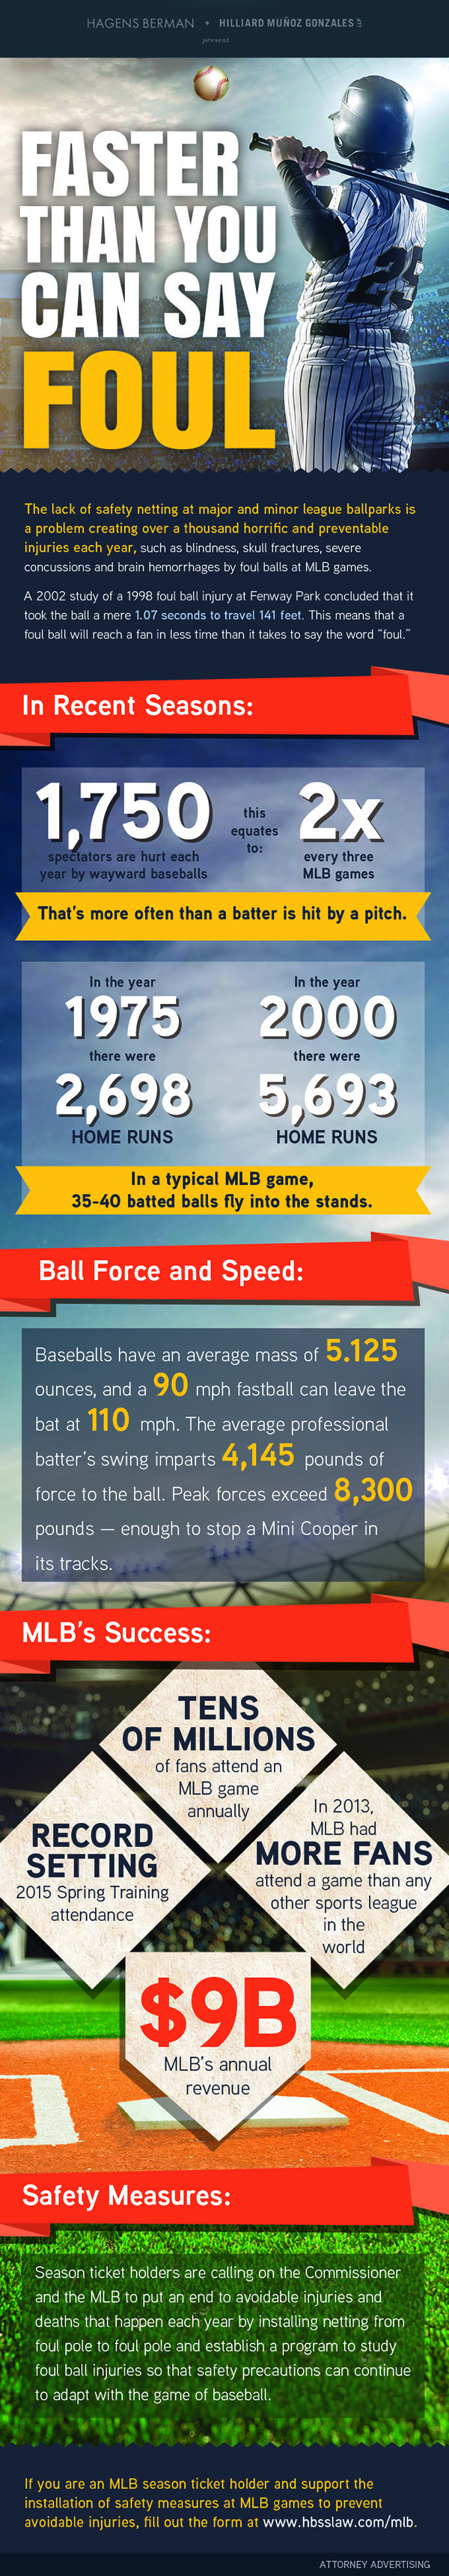 Hagens Berman MLB Foul Ball infographic